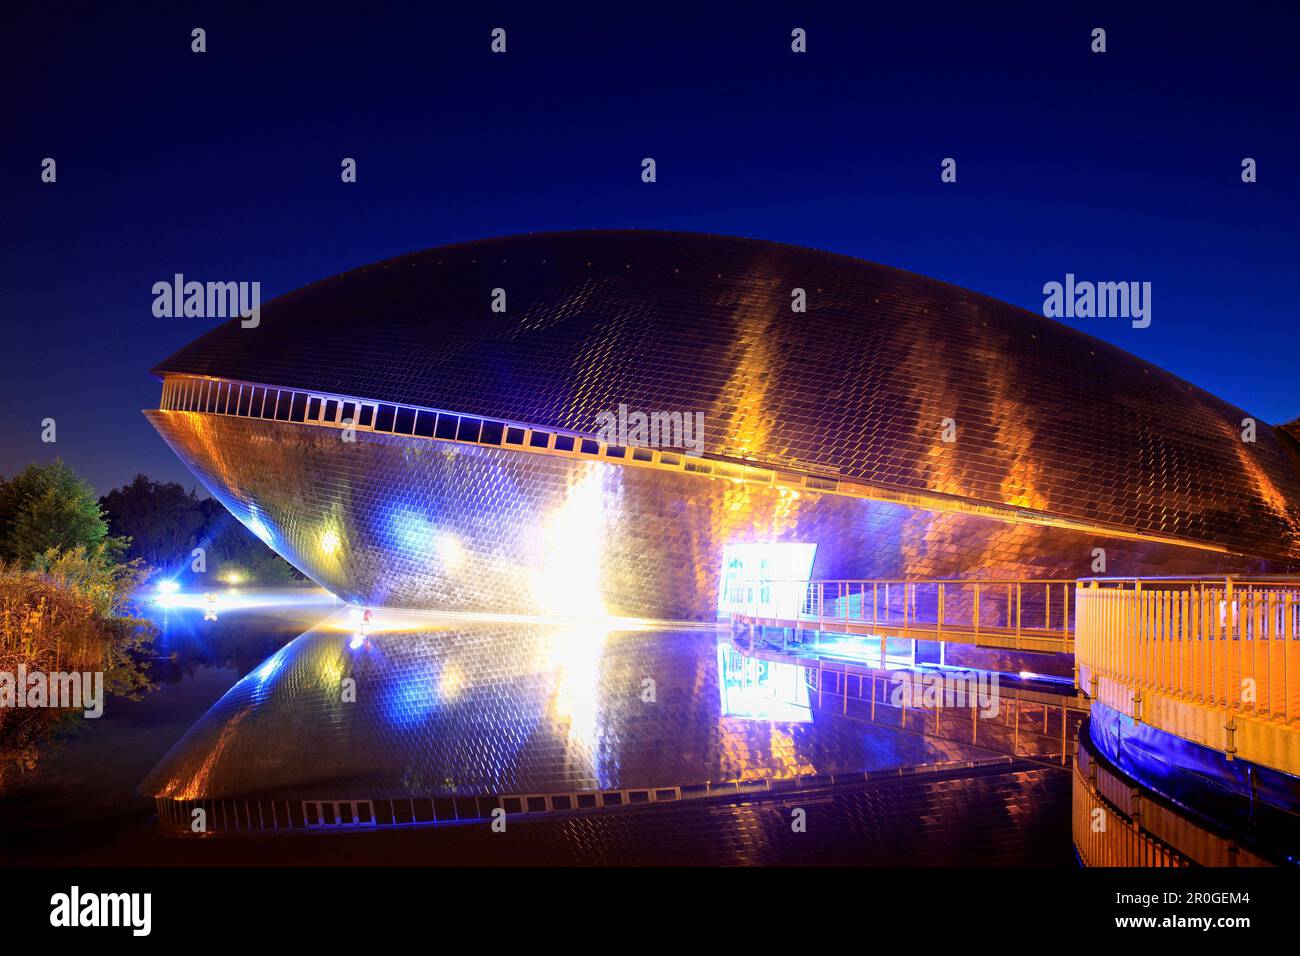 the illuminated science museum Universum at night, Hanseatic City of Bremen, Germany, Europe Stock Photo